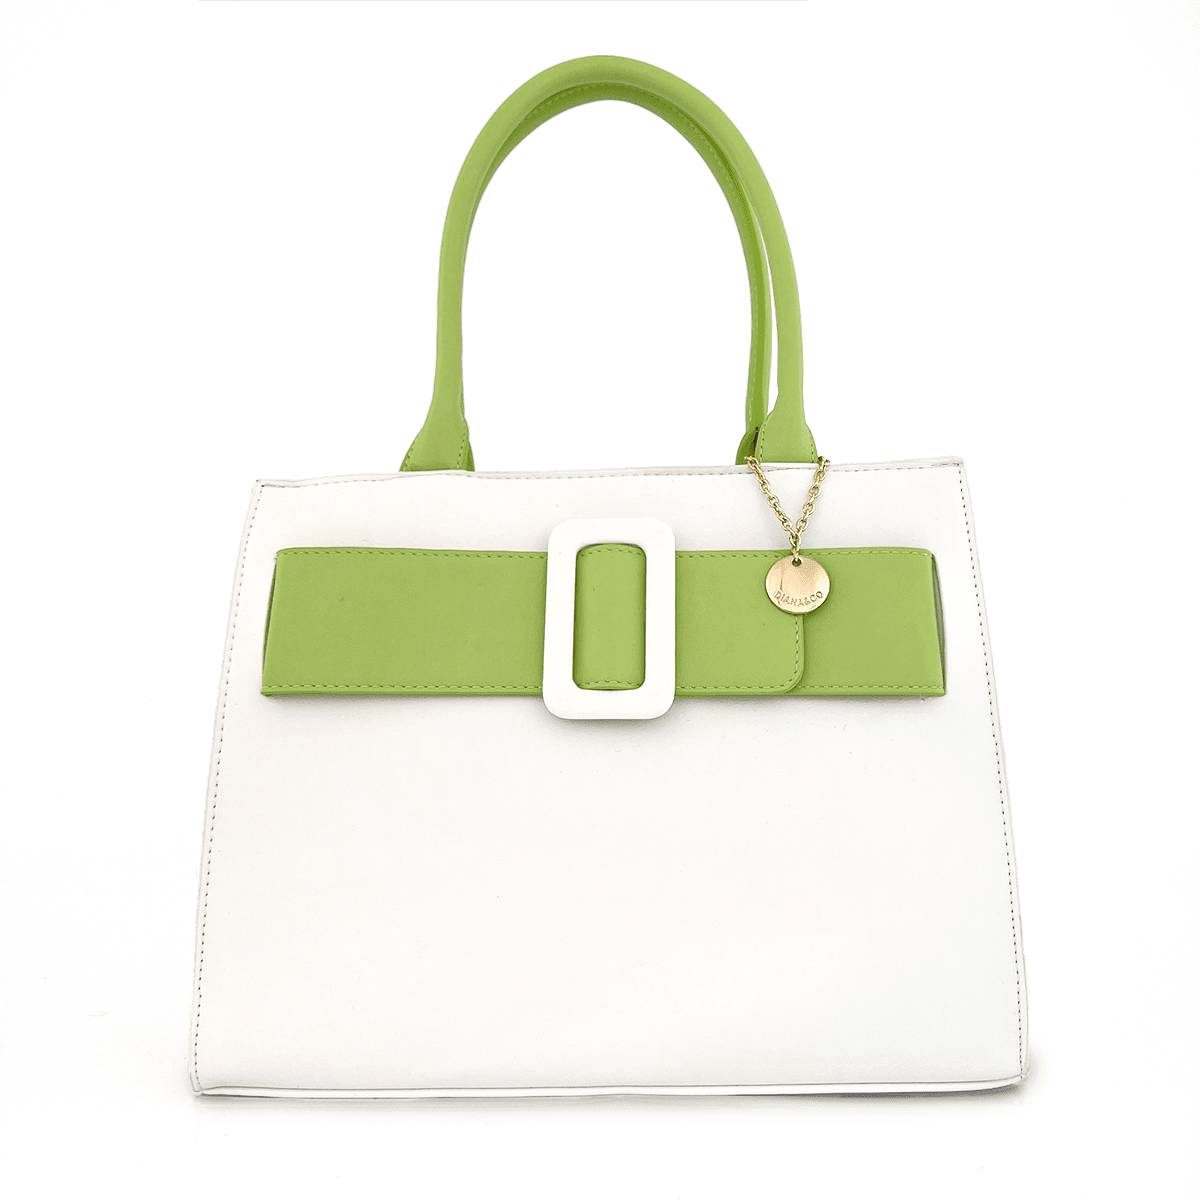 Diana & Co - Луксозaна дамска чанта - бяло/зелено